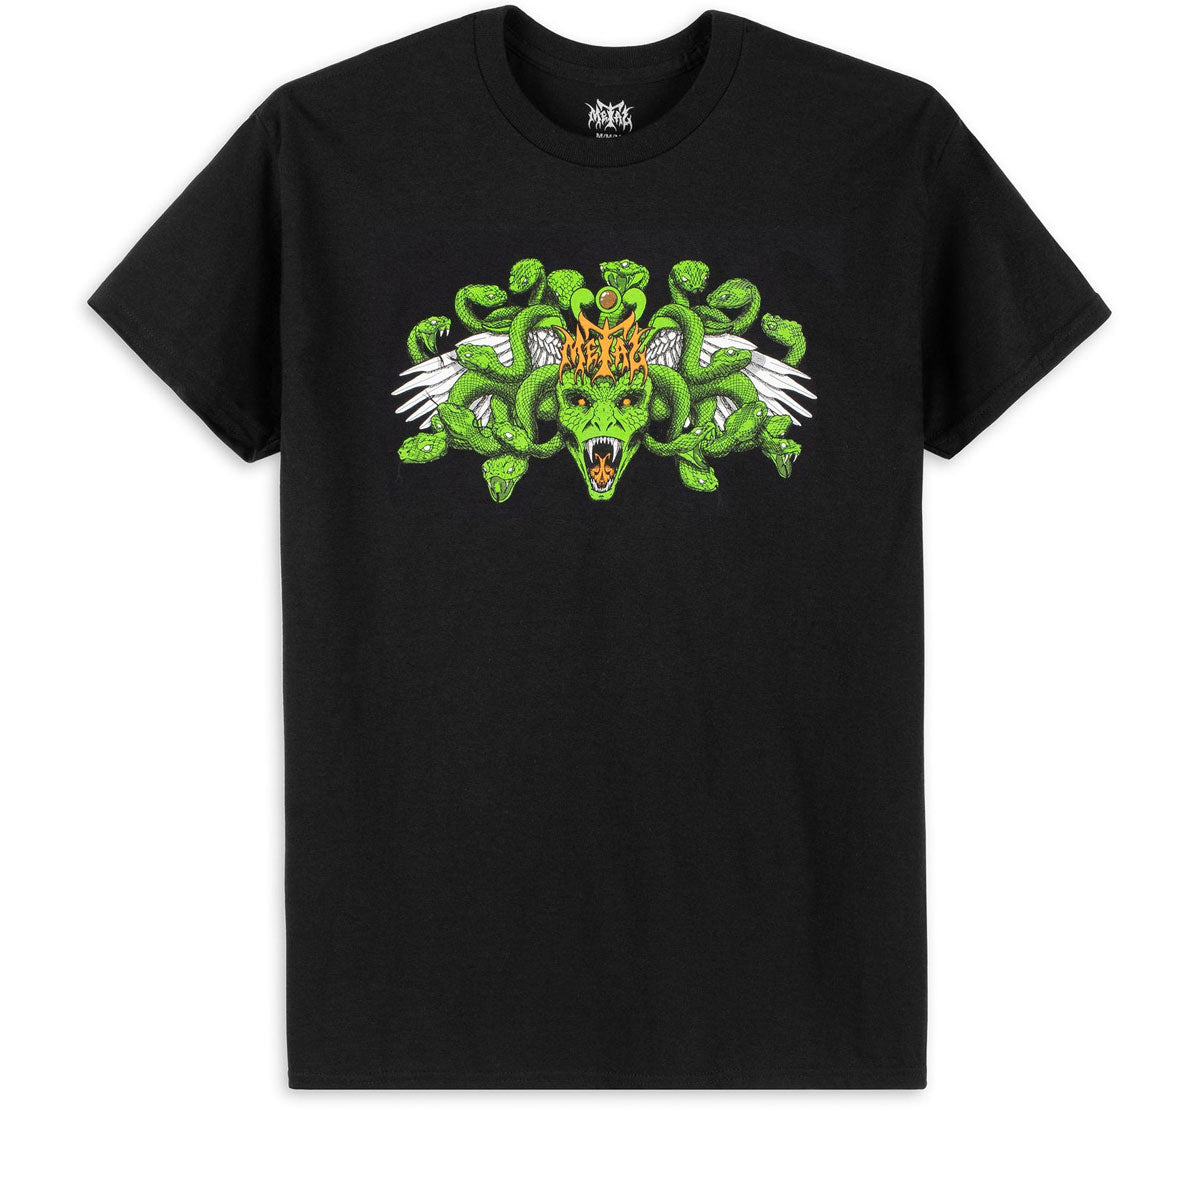 Metal Medusa T-Shirt - Black image 1